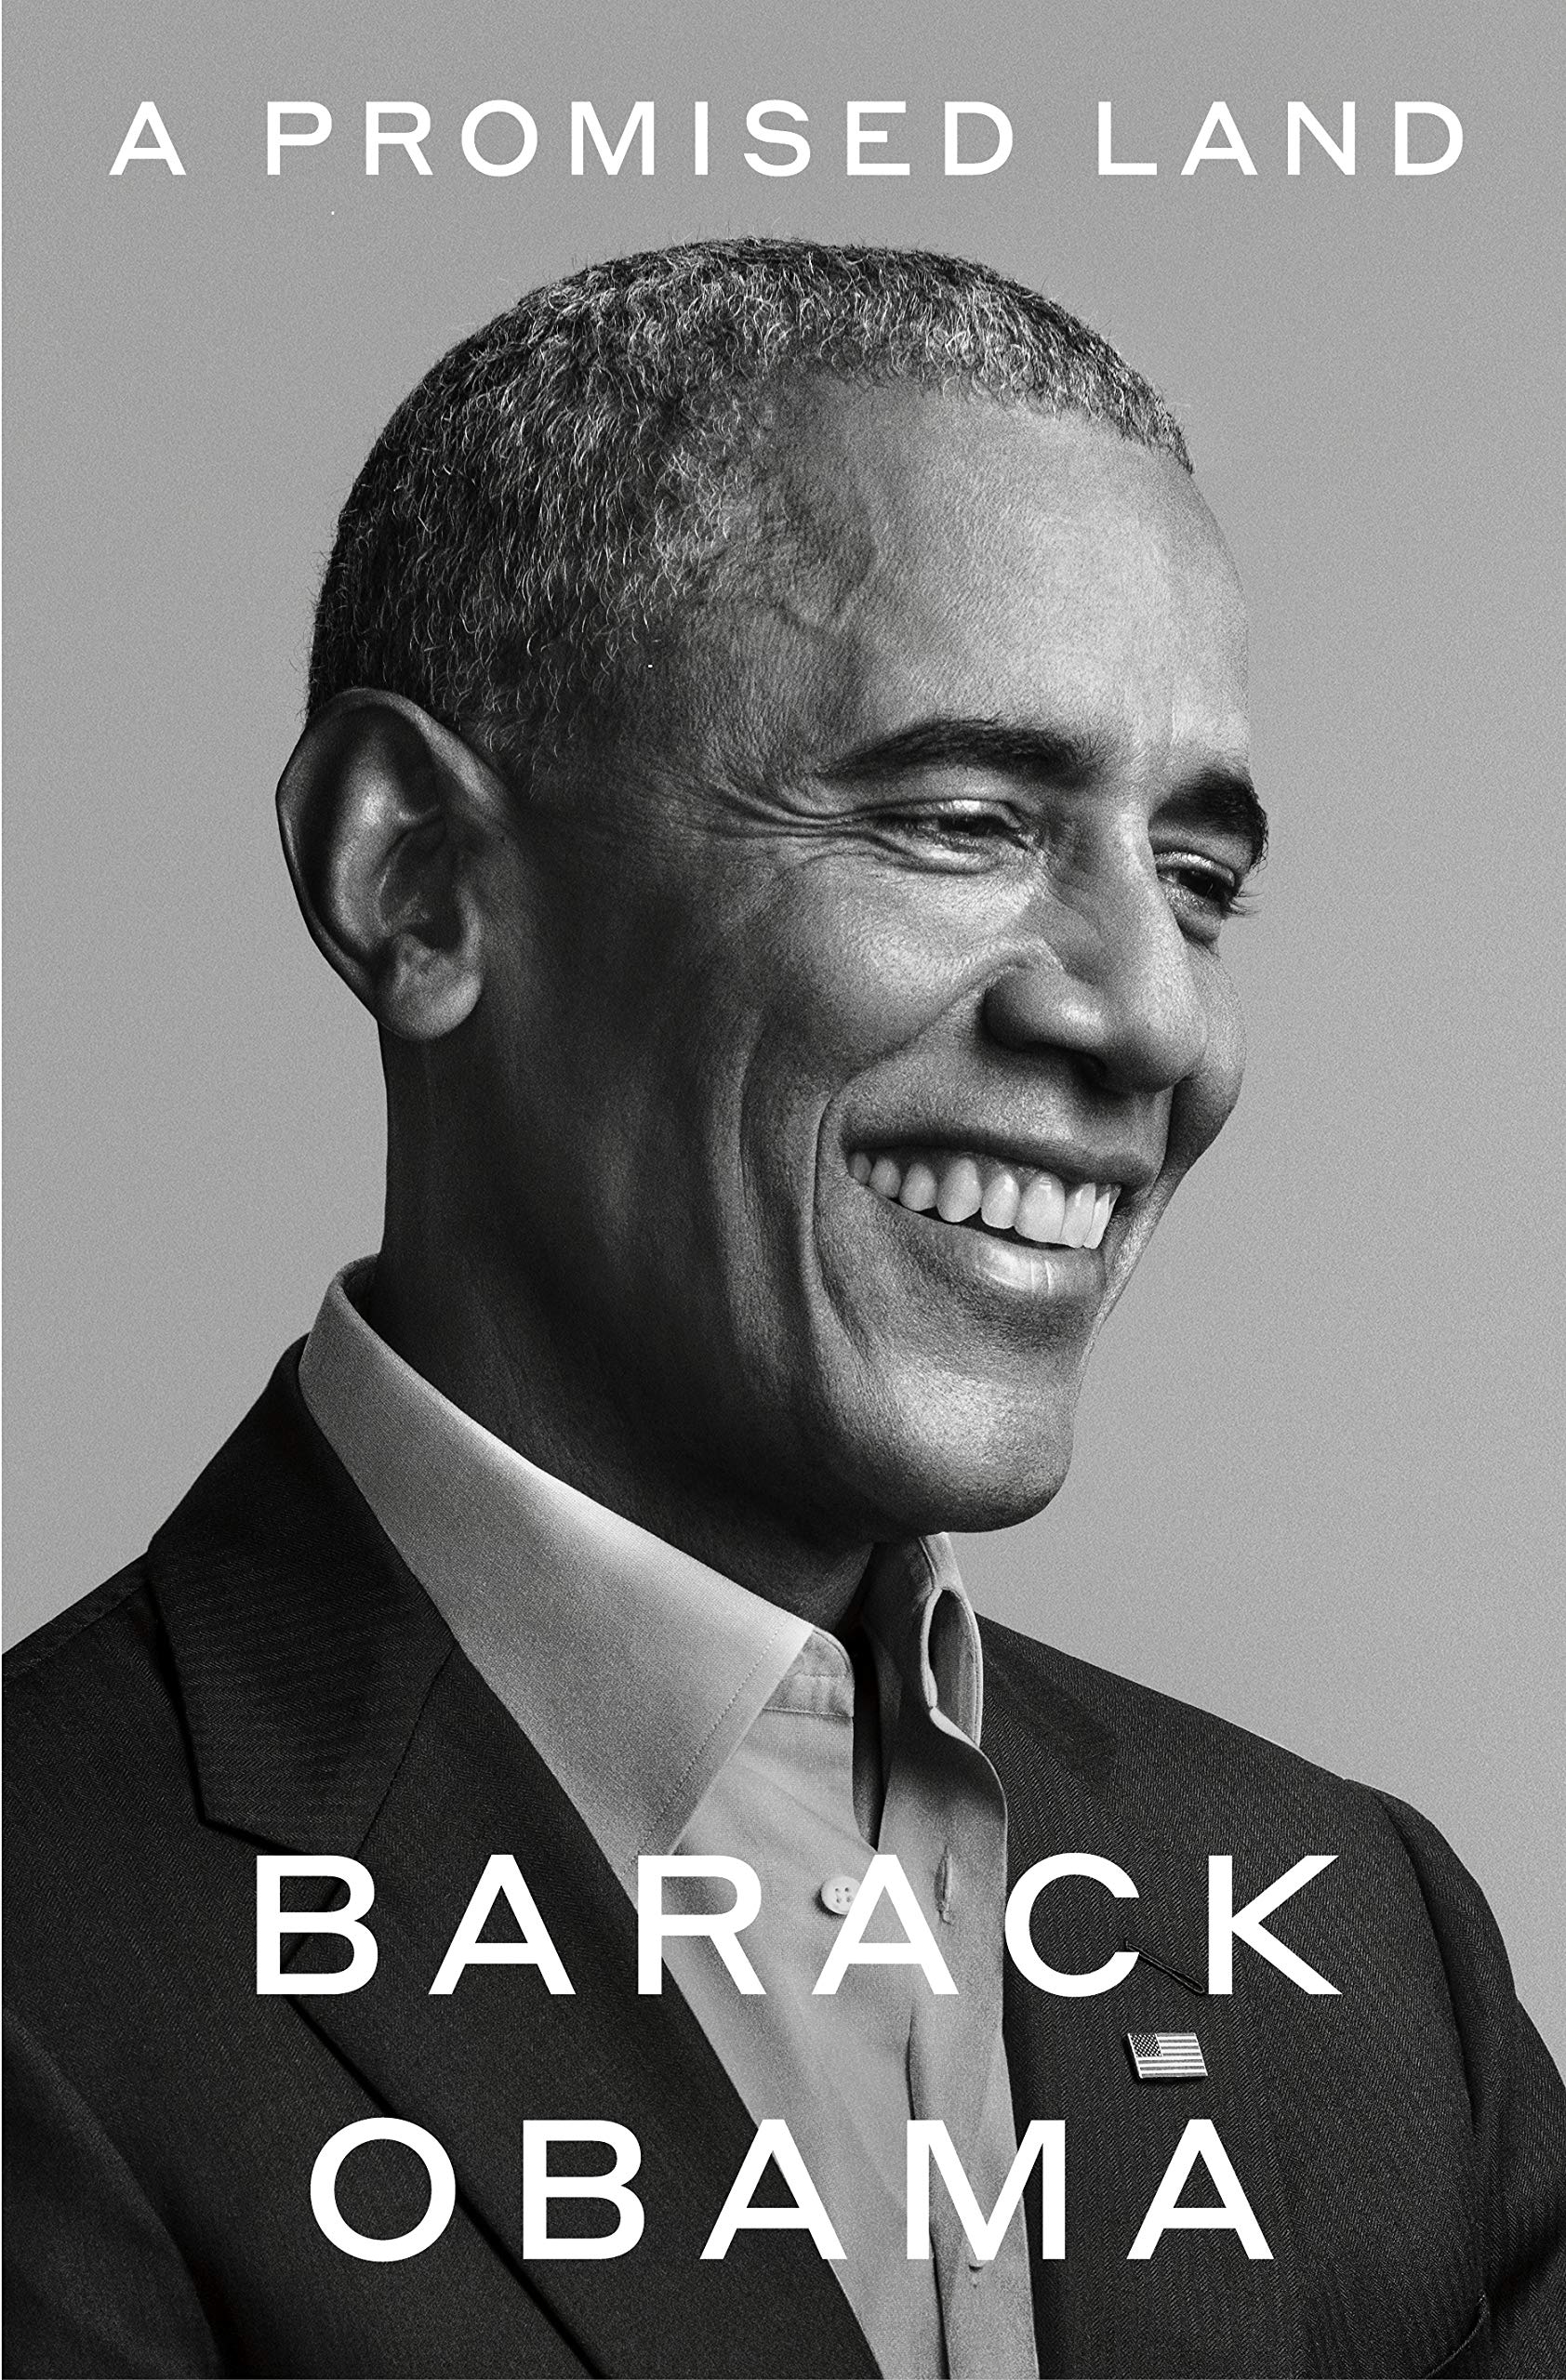 10. A Promised Land by Barack Obama